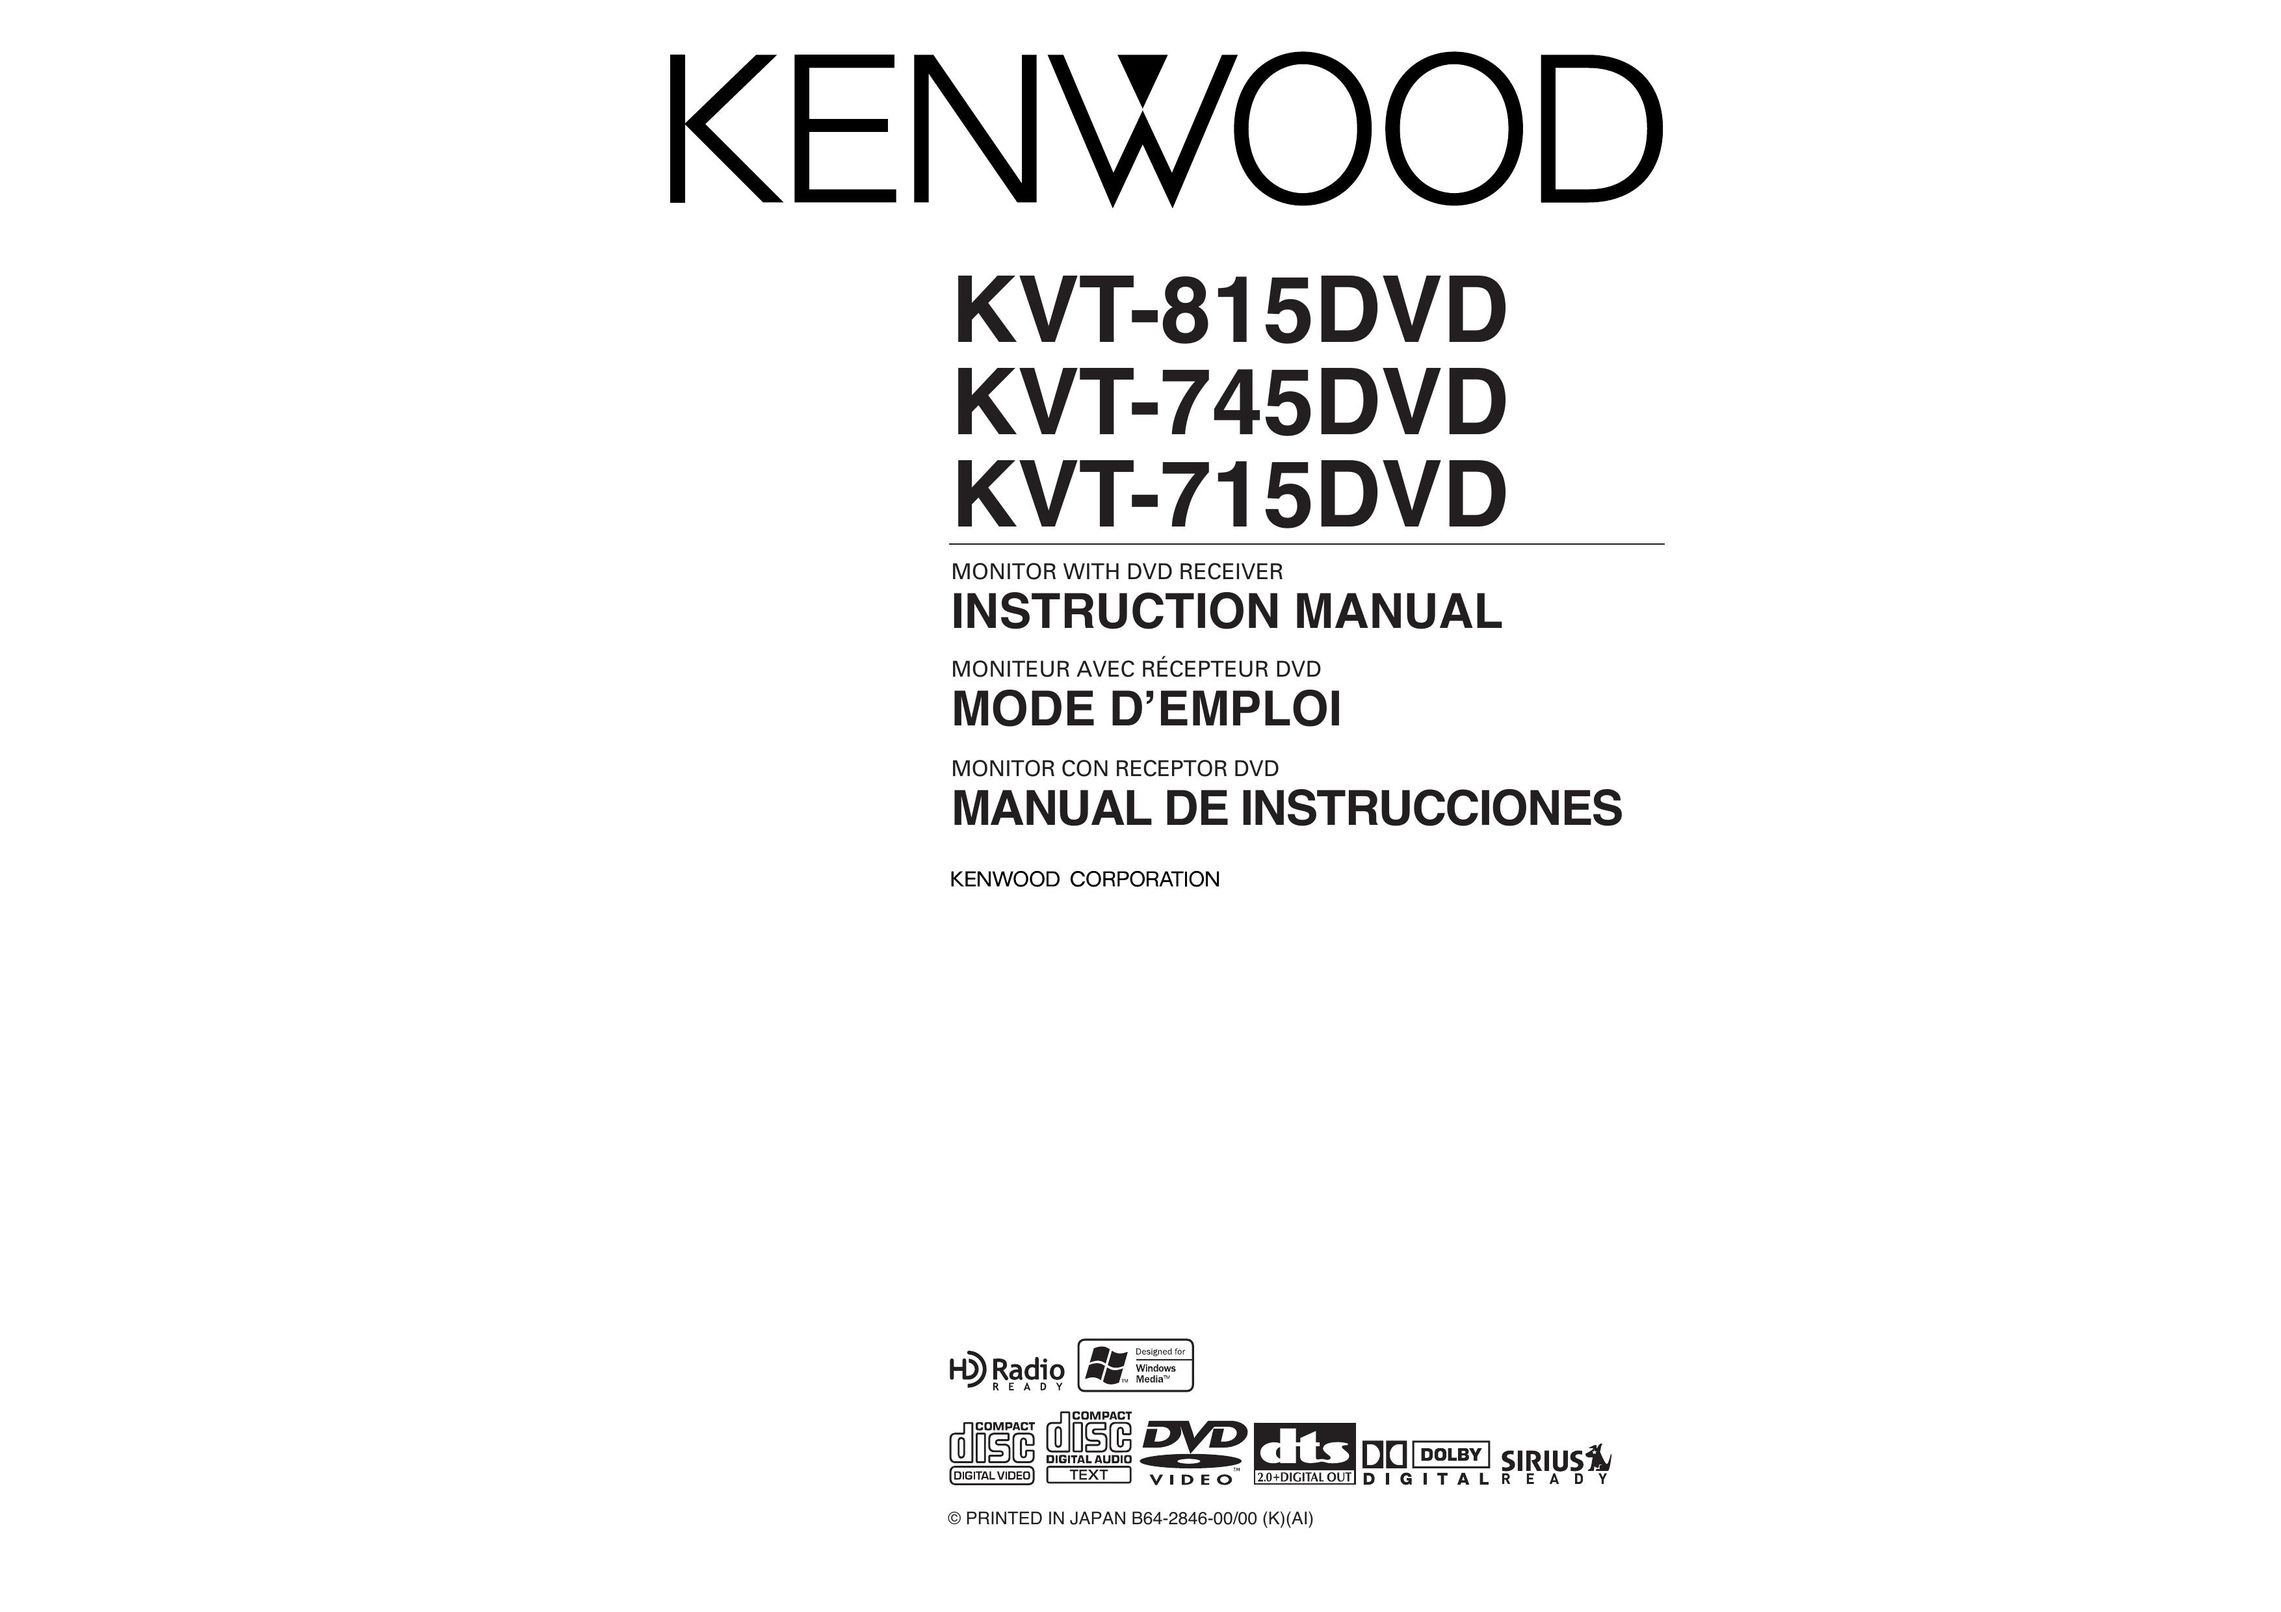 Kenwood KVT-815DVD Computer Monitor User Manual